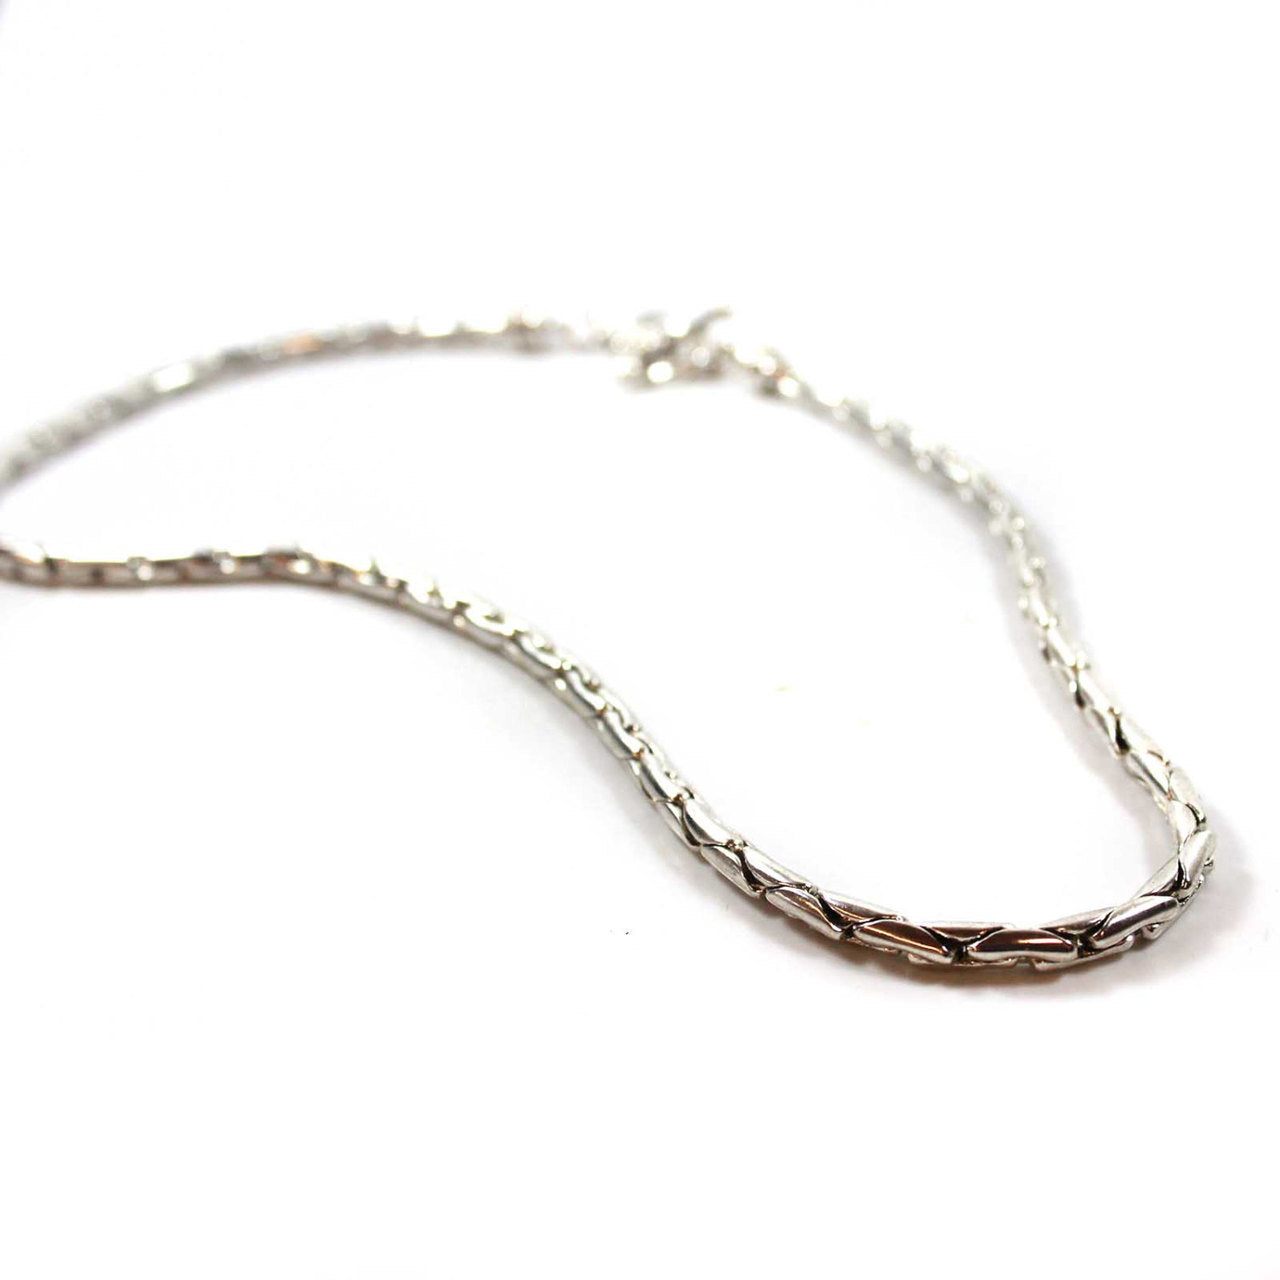 Vintage Oscar De La Renta 14 Inch Silver Tone Rounded Cobra Chain Necklace Toggle Clasp